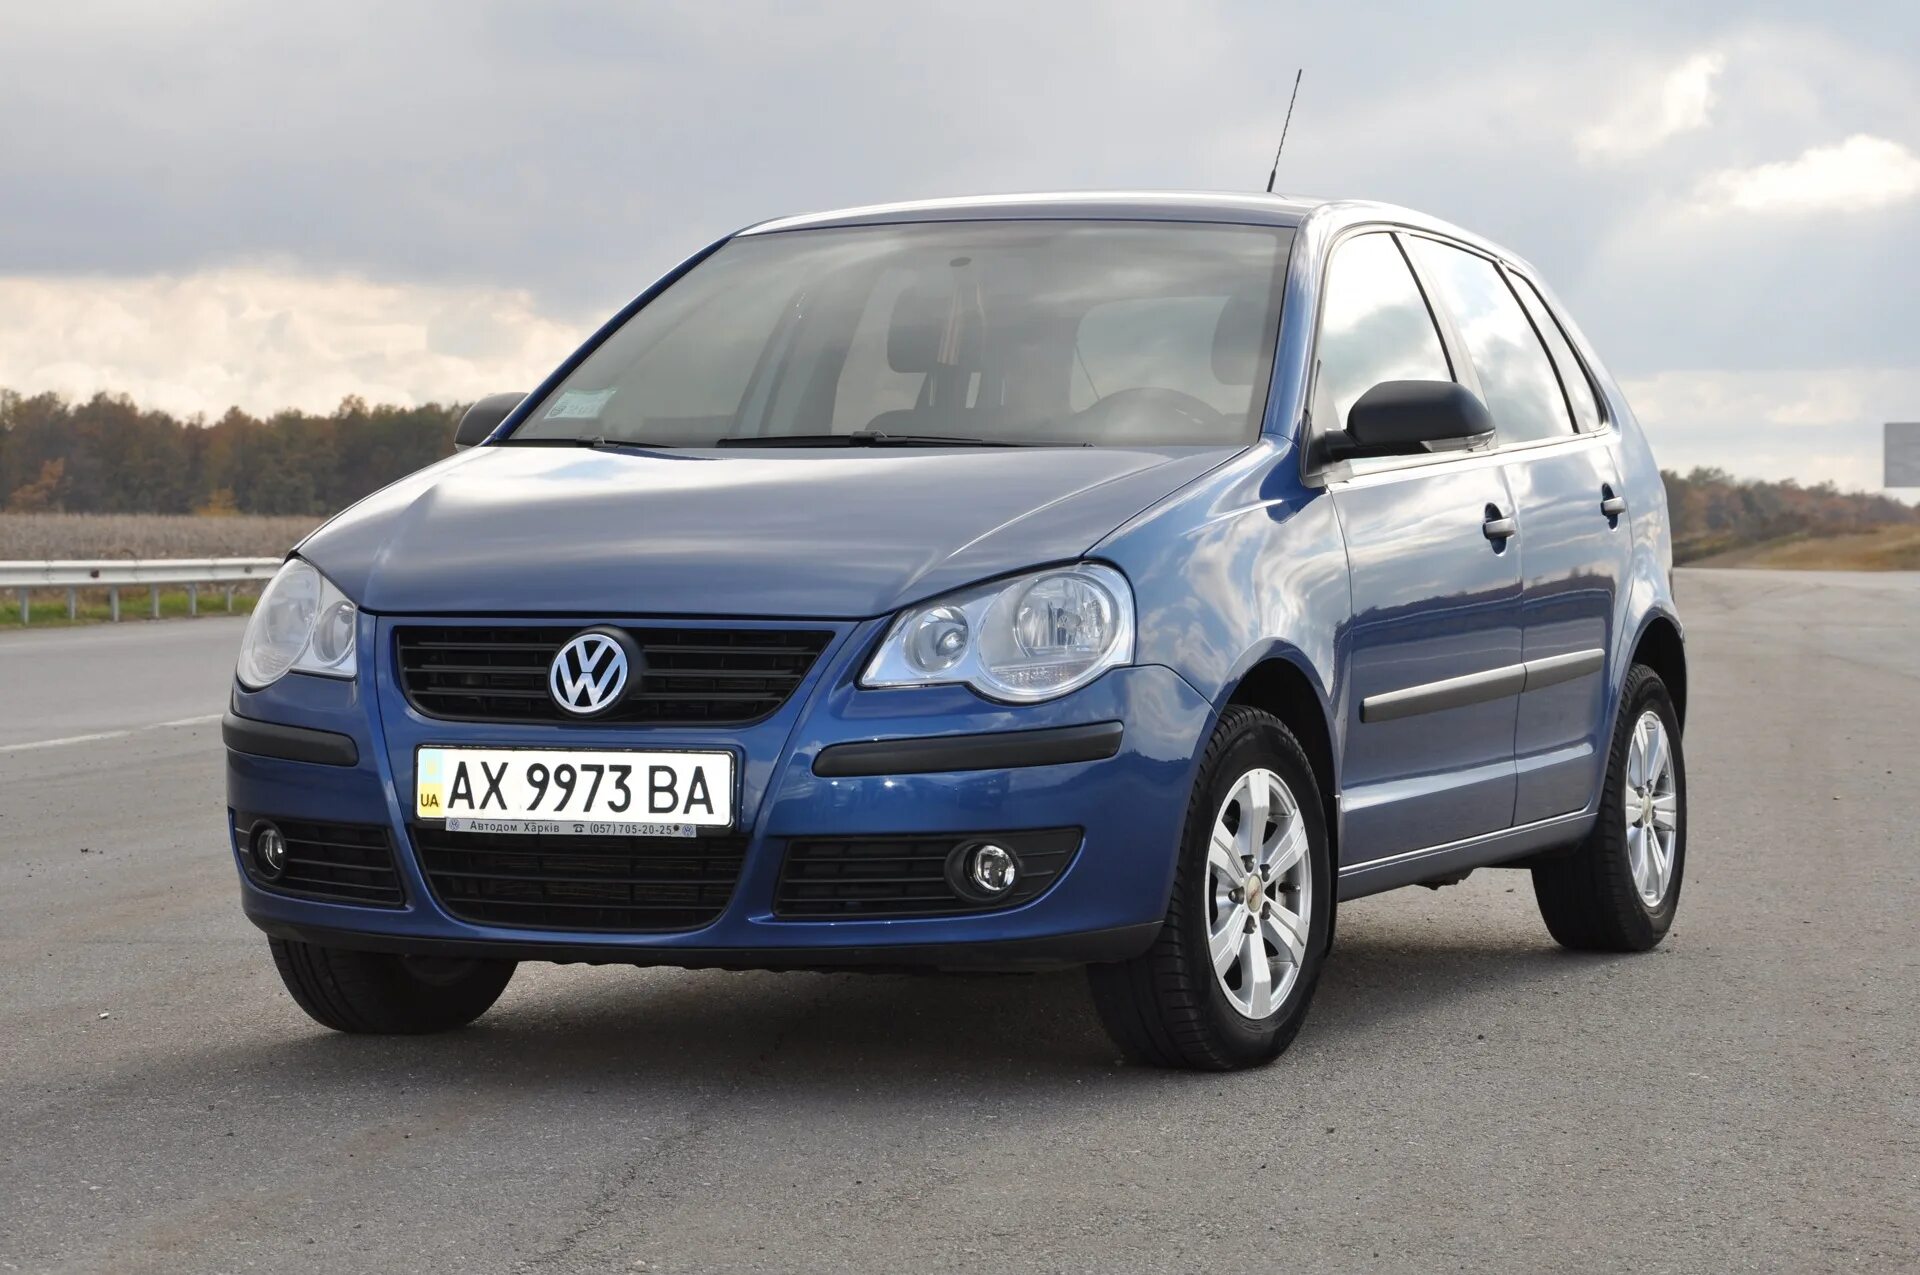 Volkswagen Polo 2007 хэтчбек. VW Polo 2007 хэтчбек. Фольксваген поло 2007 хэтчбек 1.4. Volkswagen Polo Hatchback 2007.